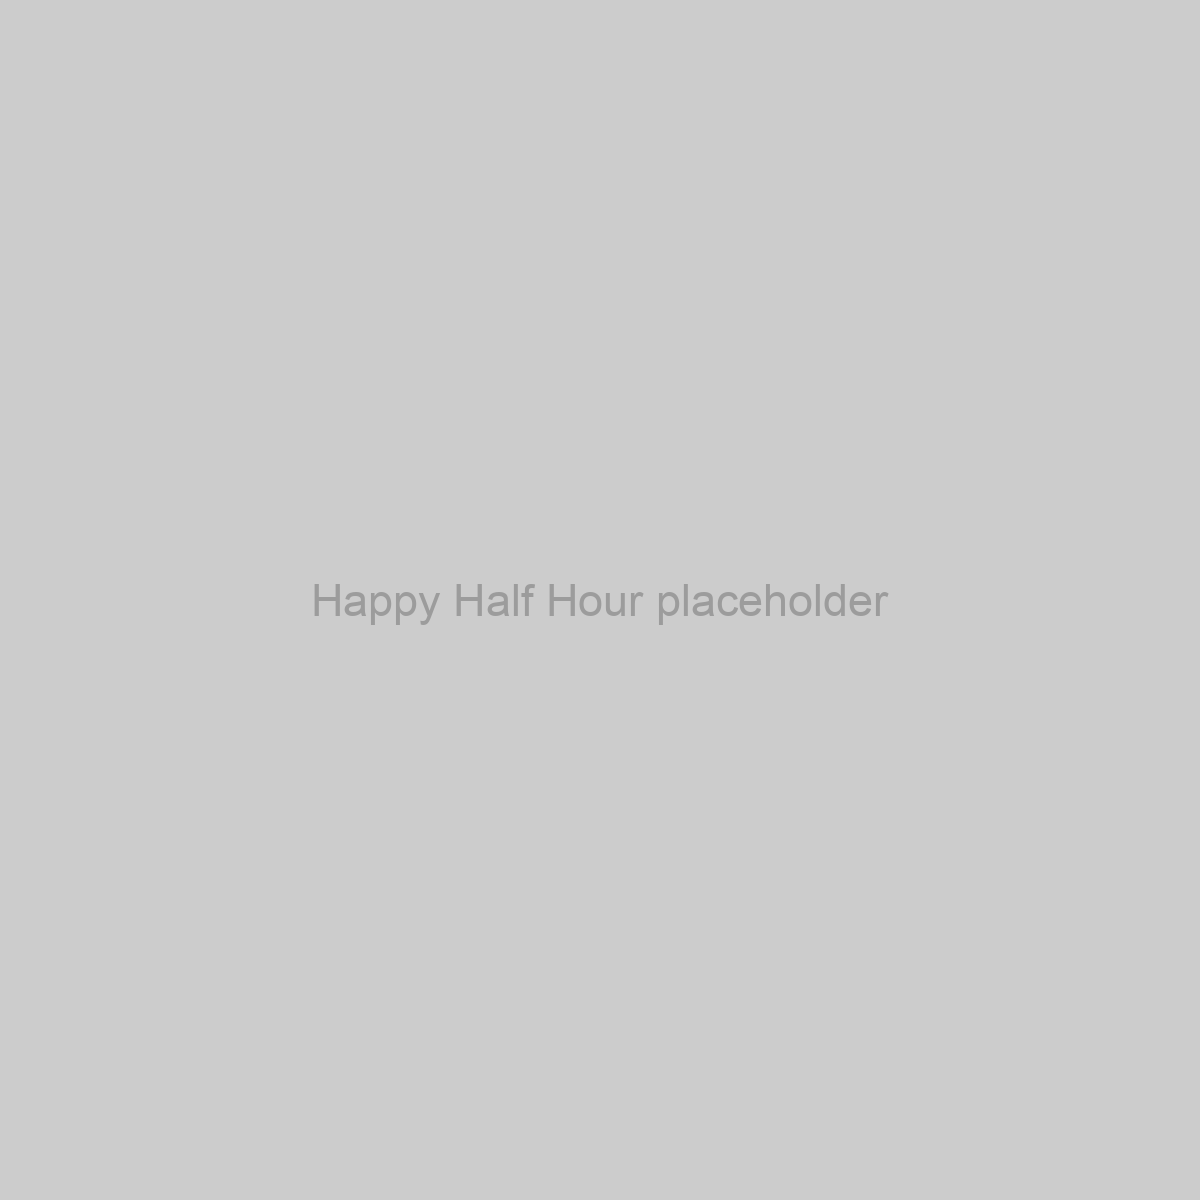 Happy Half Hour Placeholder Image